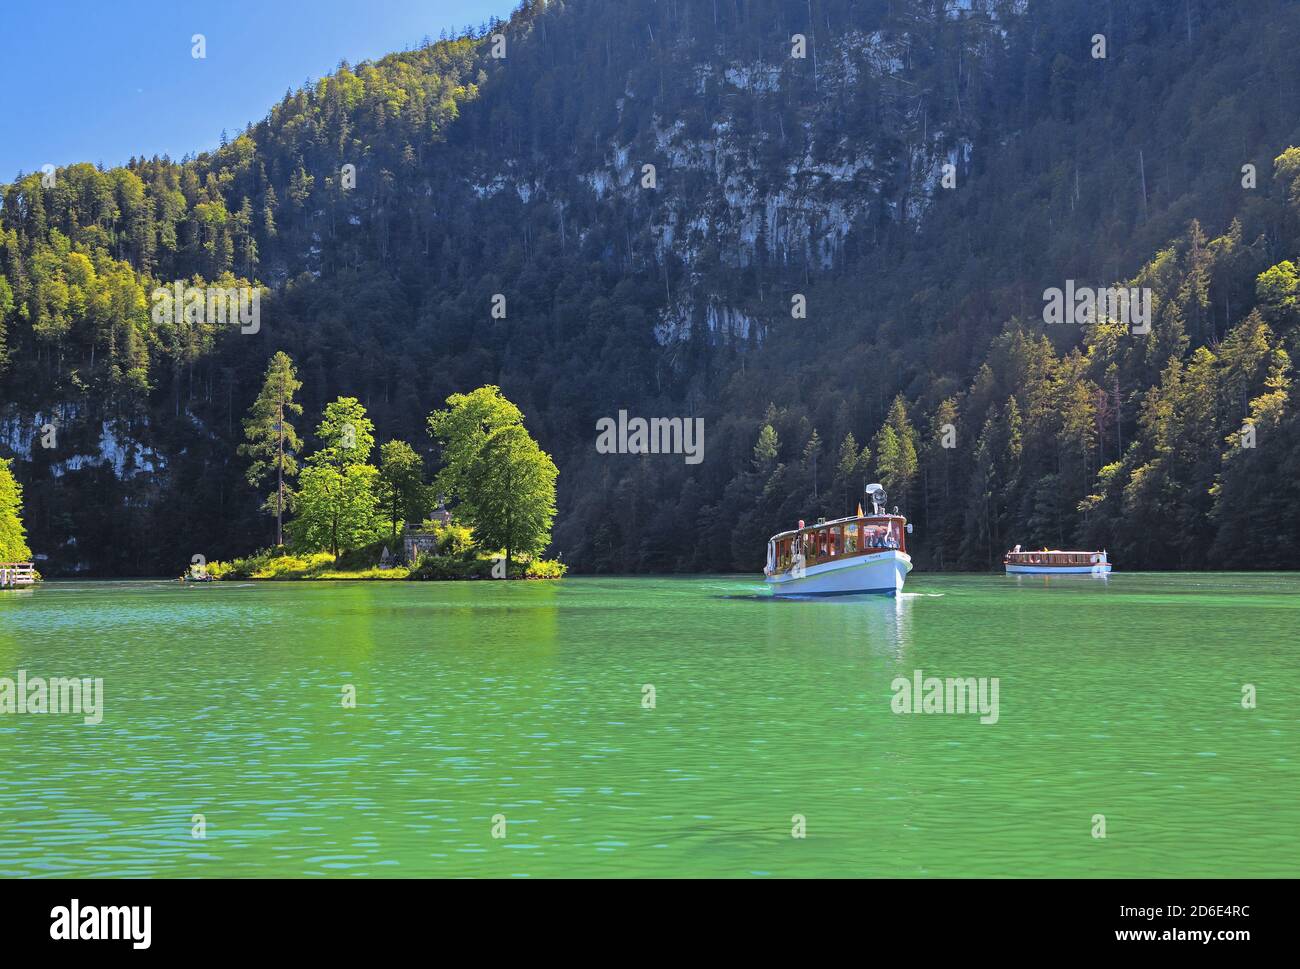 Christlieger island and tour boats on the Koenigssee, Schönau am Koenigssee, Berchtesgadener Land, Upper Bavaria, Bavaria, Germany Stock Photo